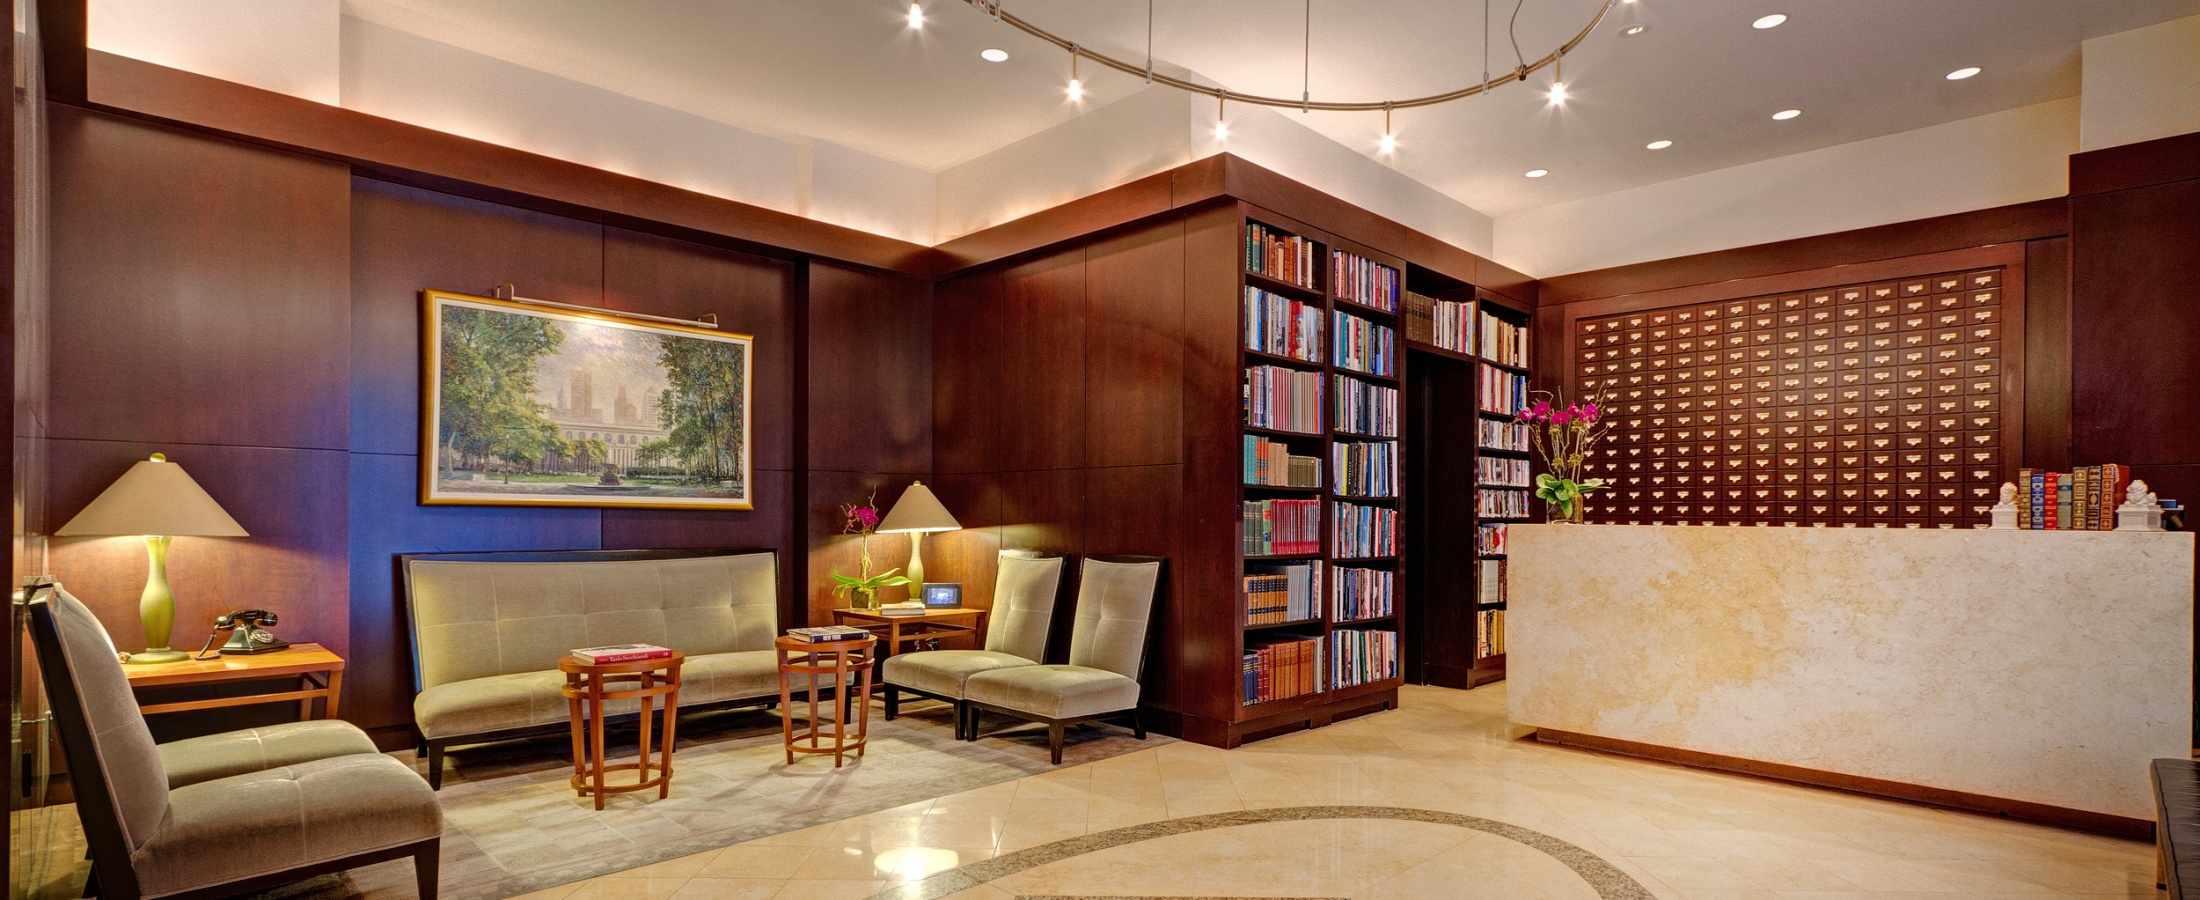 Library Hotel New York City - Reception